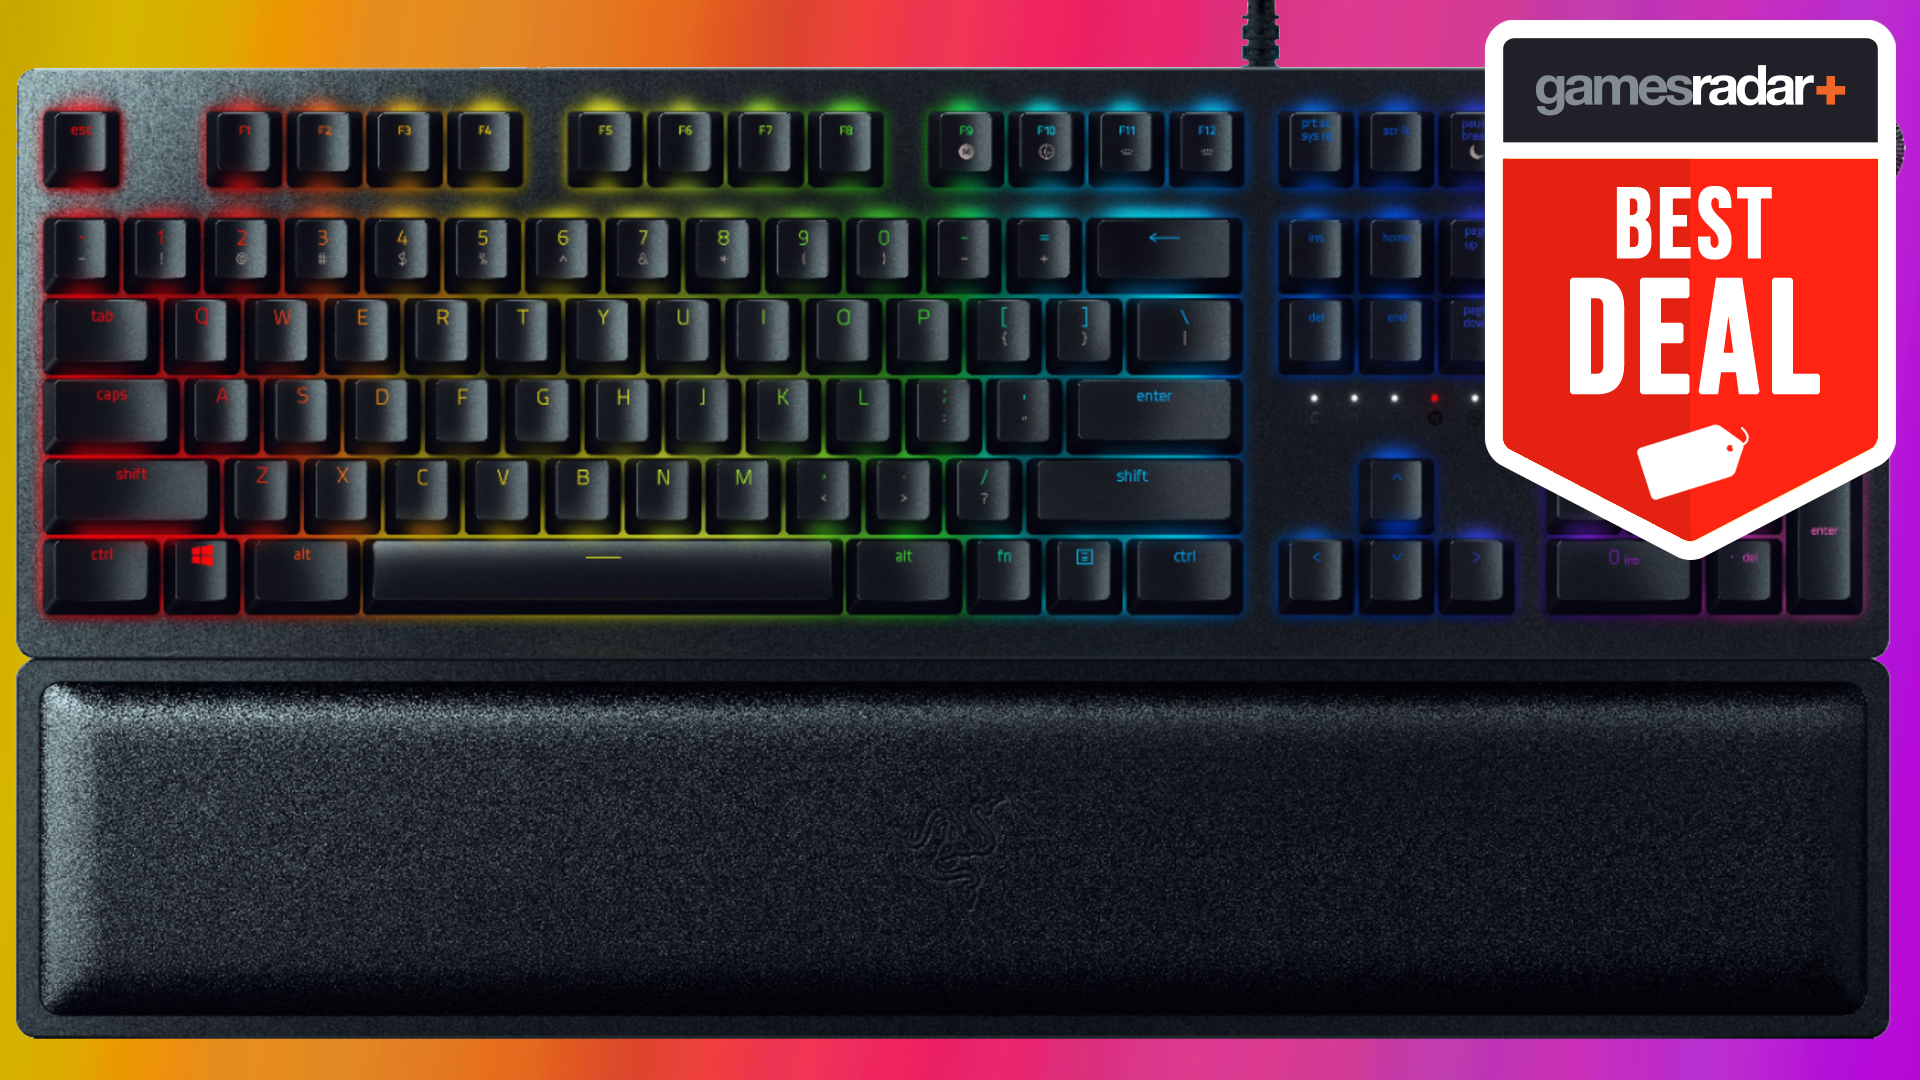 Best gaming keyboard deal: Get a Razer BlackWidow V3 for under $100